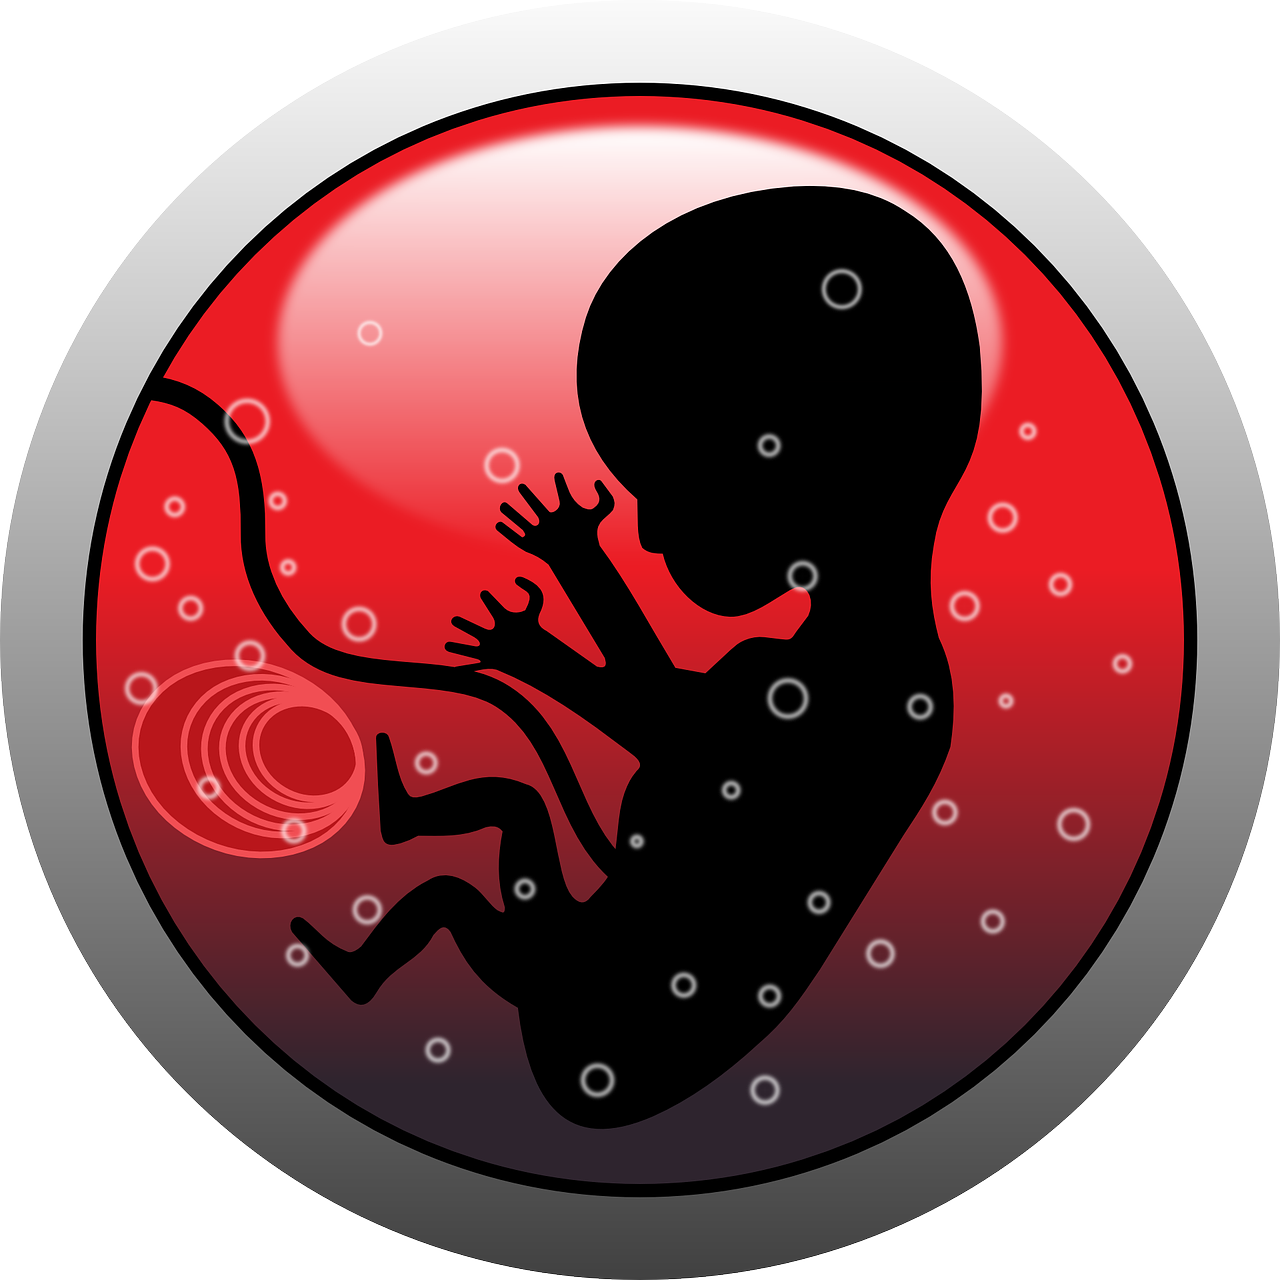 embryo human infant free photo